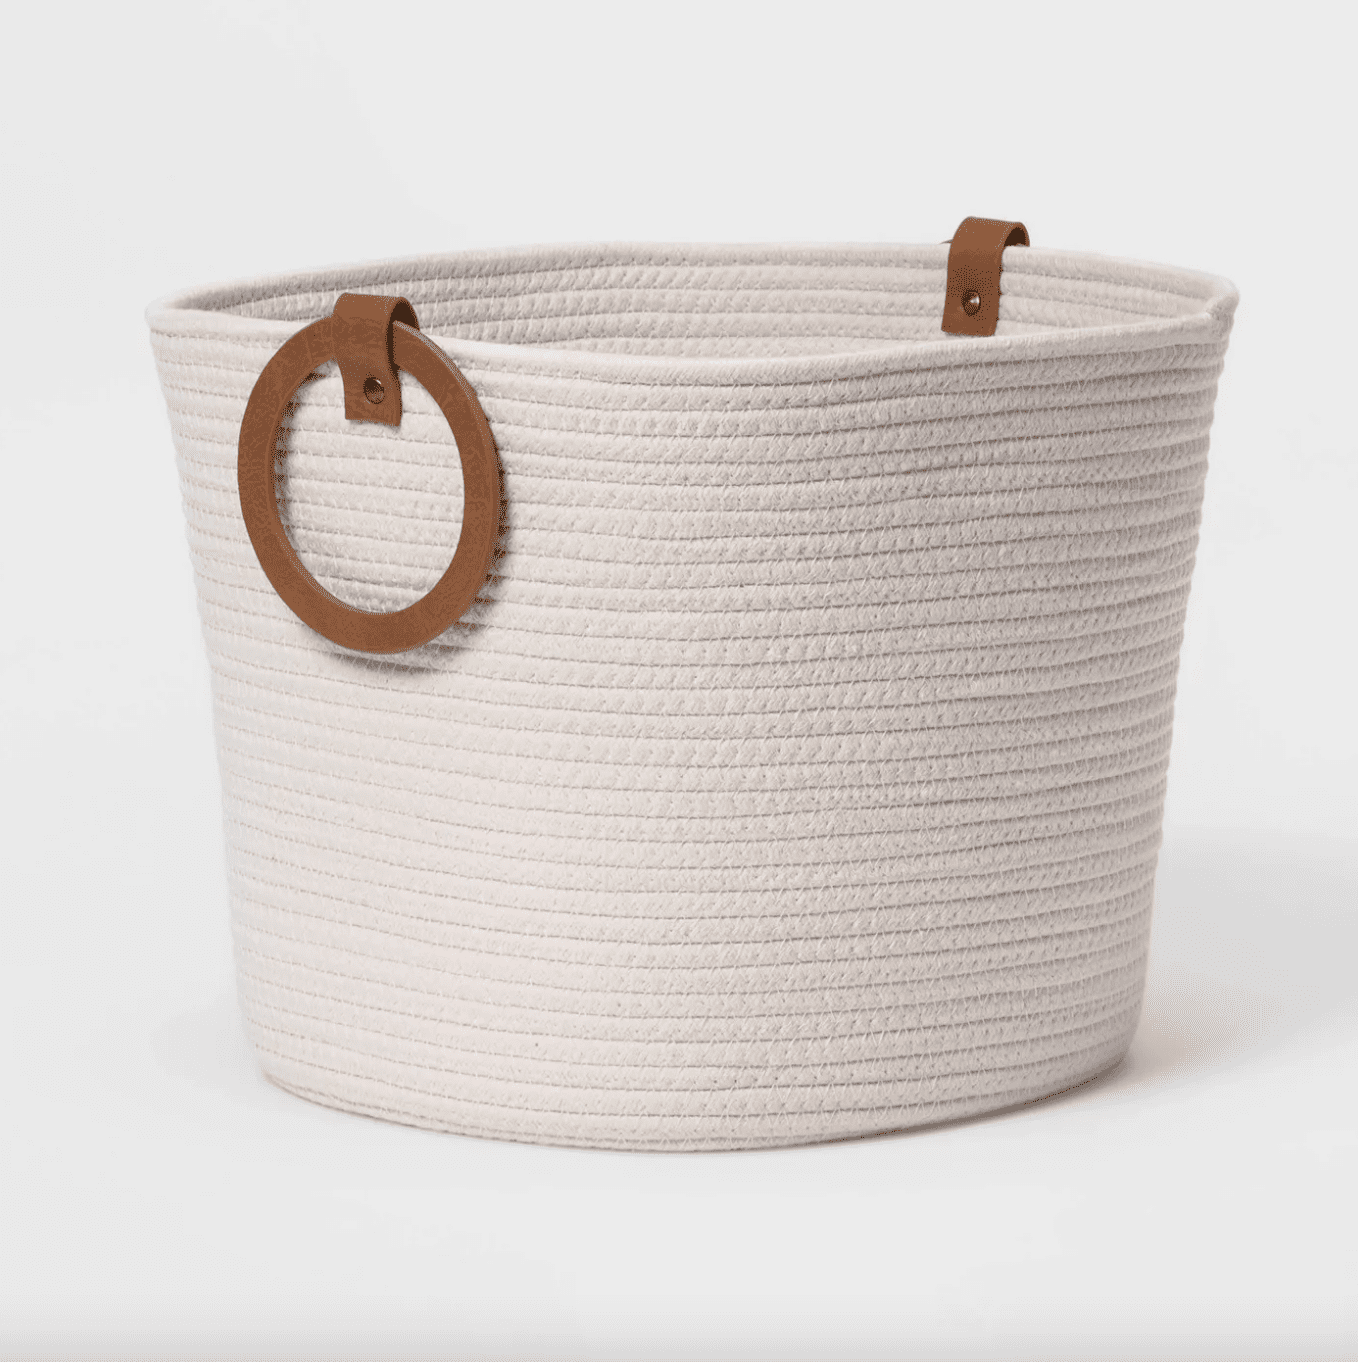 EZOWare Laundry Basket Handle Rope Storage Soft Cotton Woven Extra Large Hamper